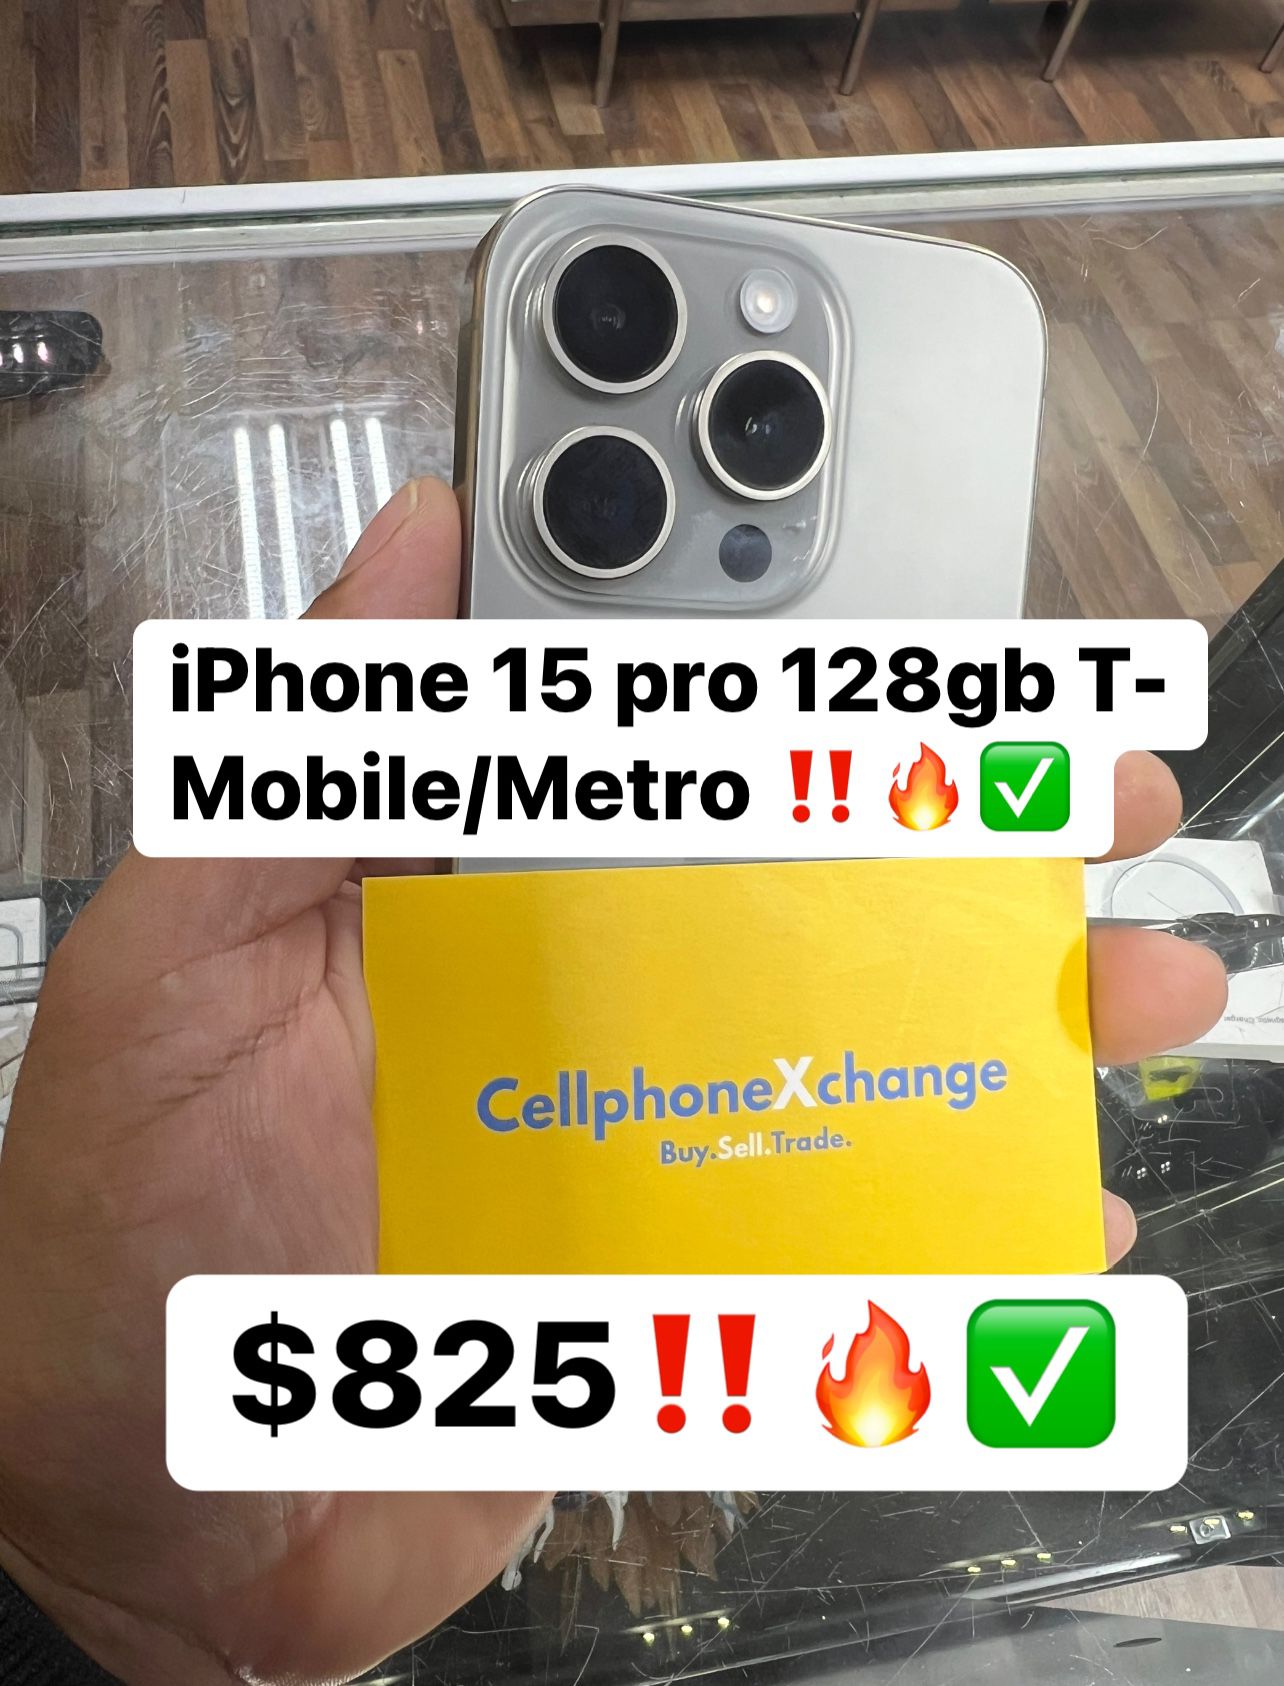 iPhone 15 Pro 128gb Tmobile/Metro 